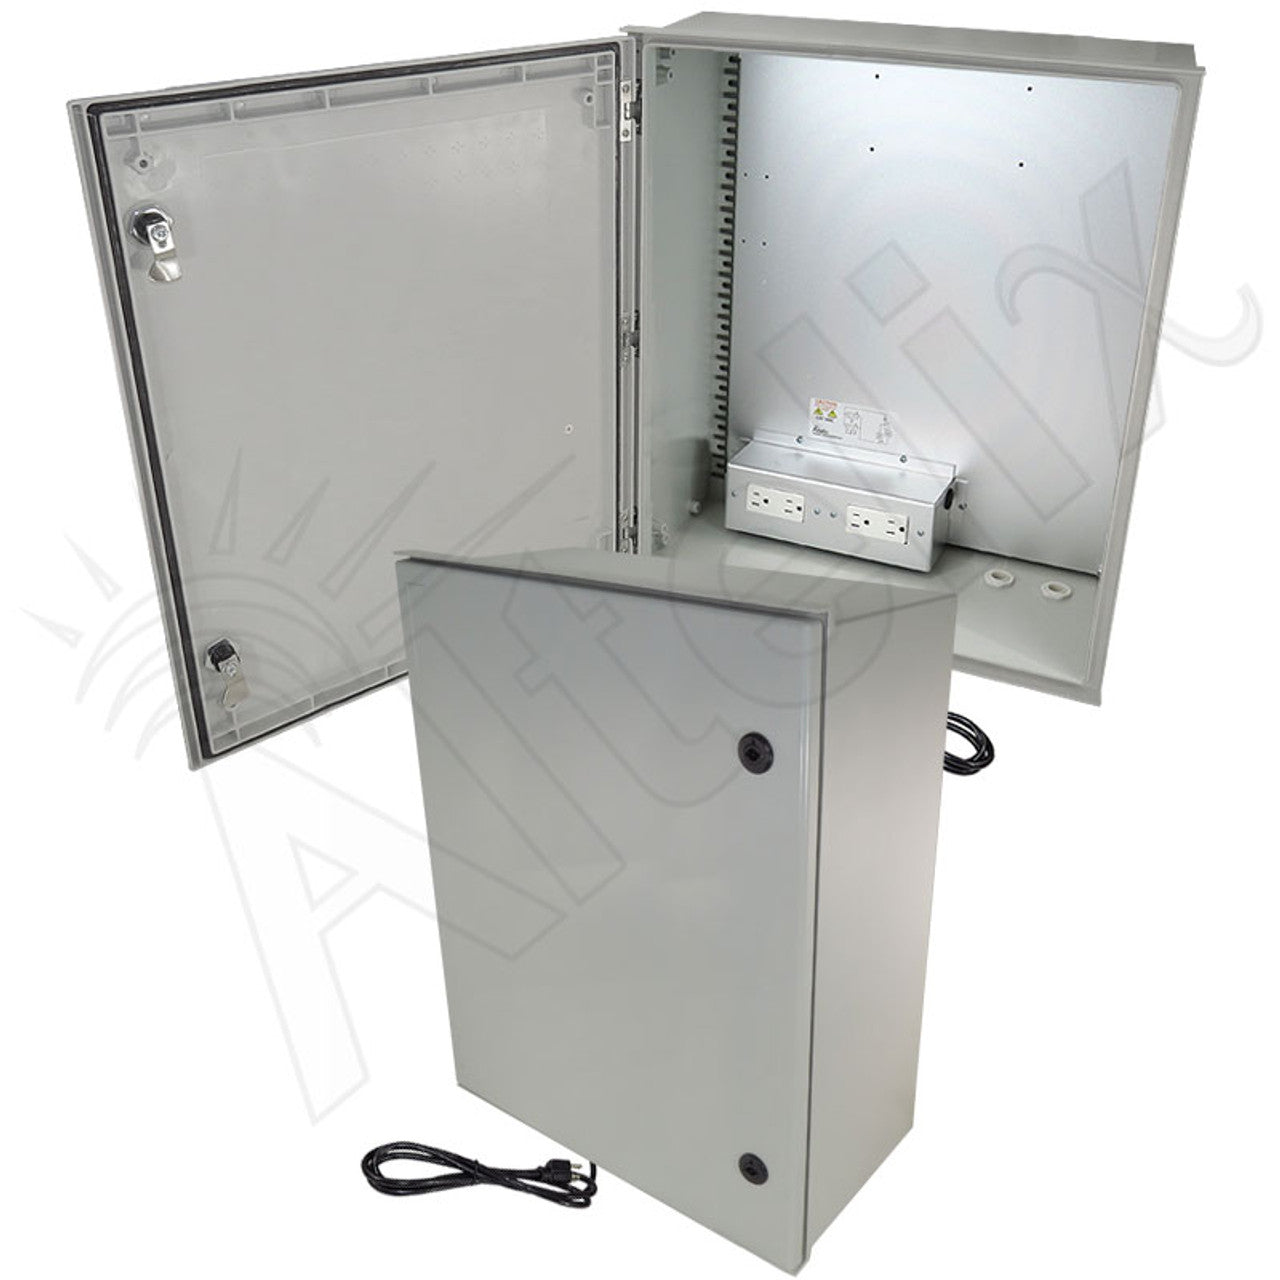 Altelix NEMA 3X Fiberglass Weatherproof Enclosure with Equipment Mounting Plate, 120 VAC Outlets & Power Cord-6